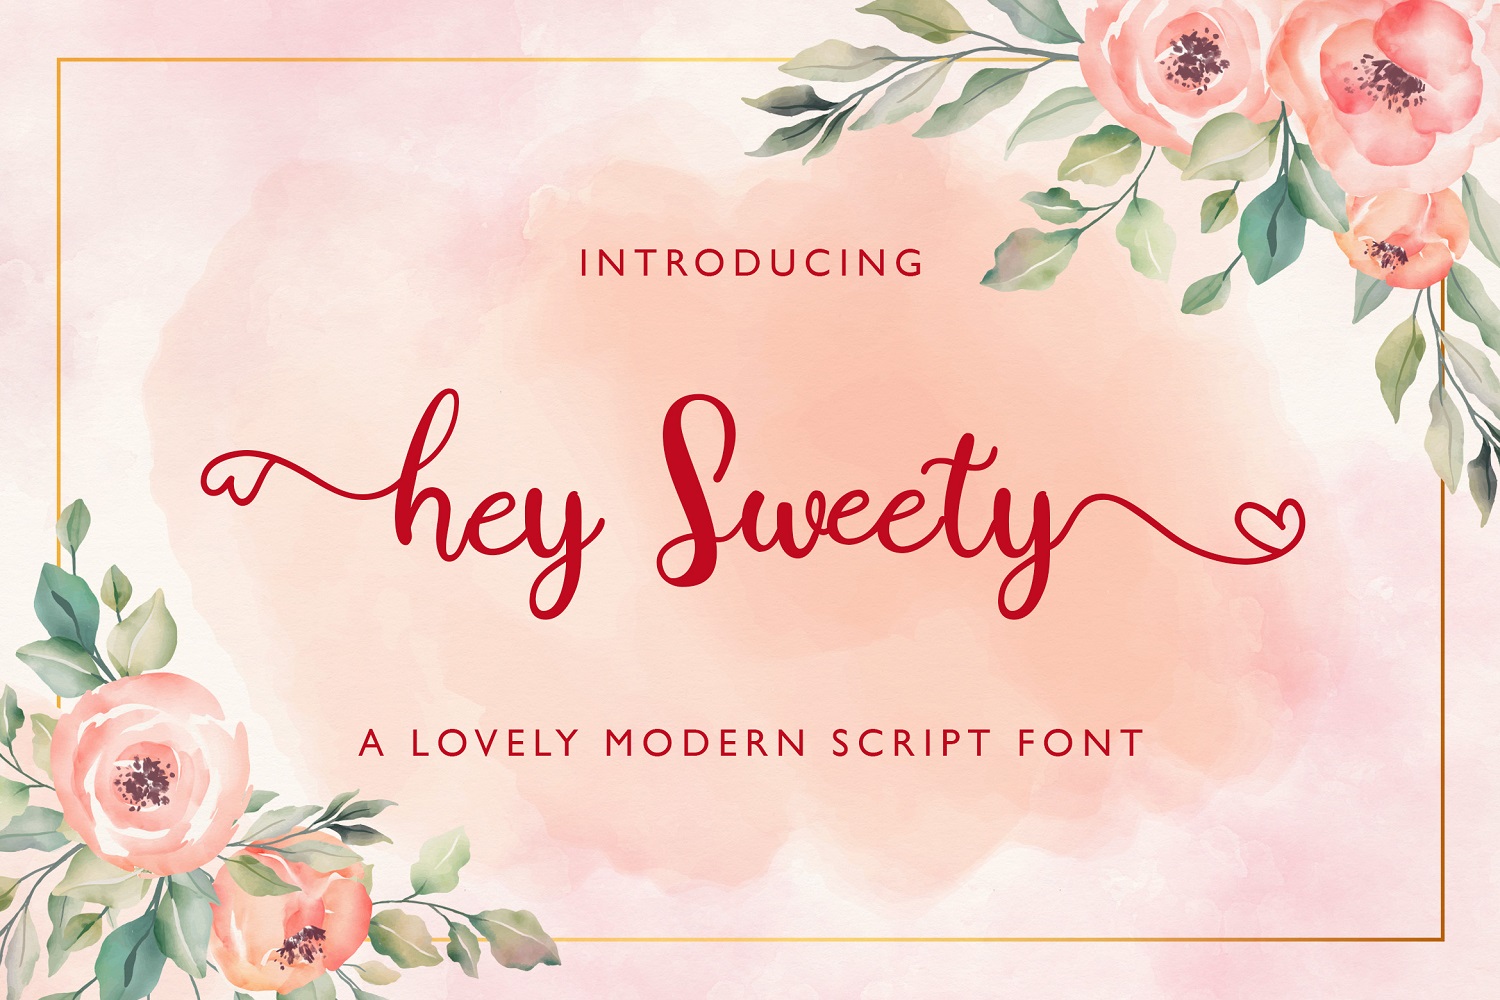 Hey Sweety Modern Calligraphy Script Font